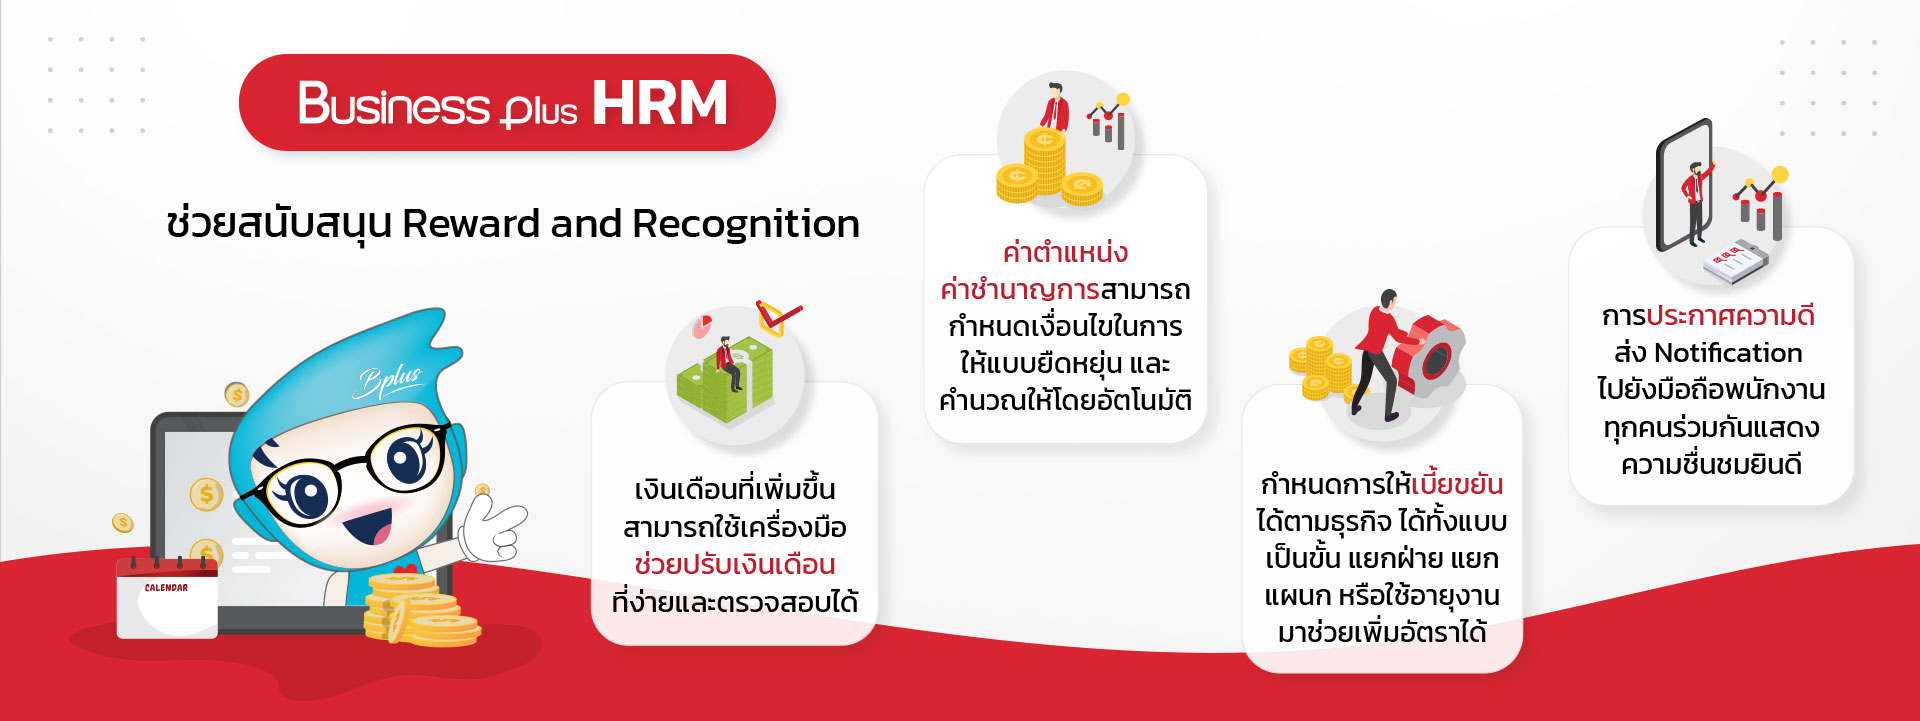 Business-Plus-HRM-ช่วยงาน-Employee-Recognition.jpg